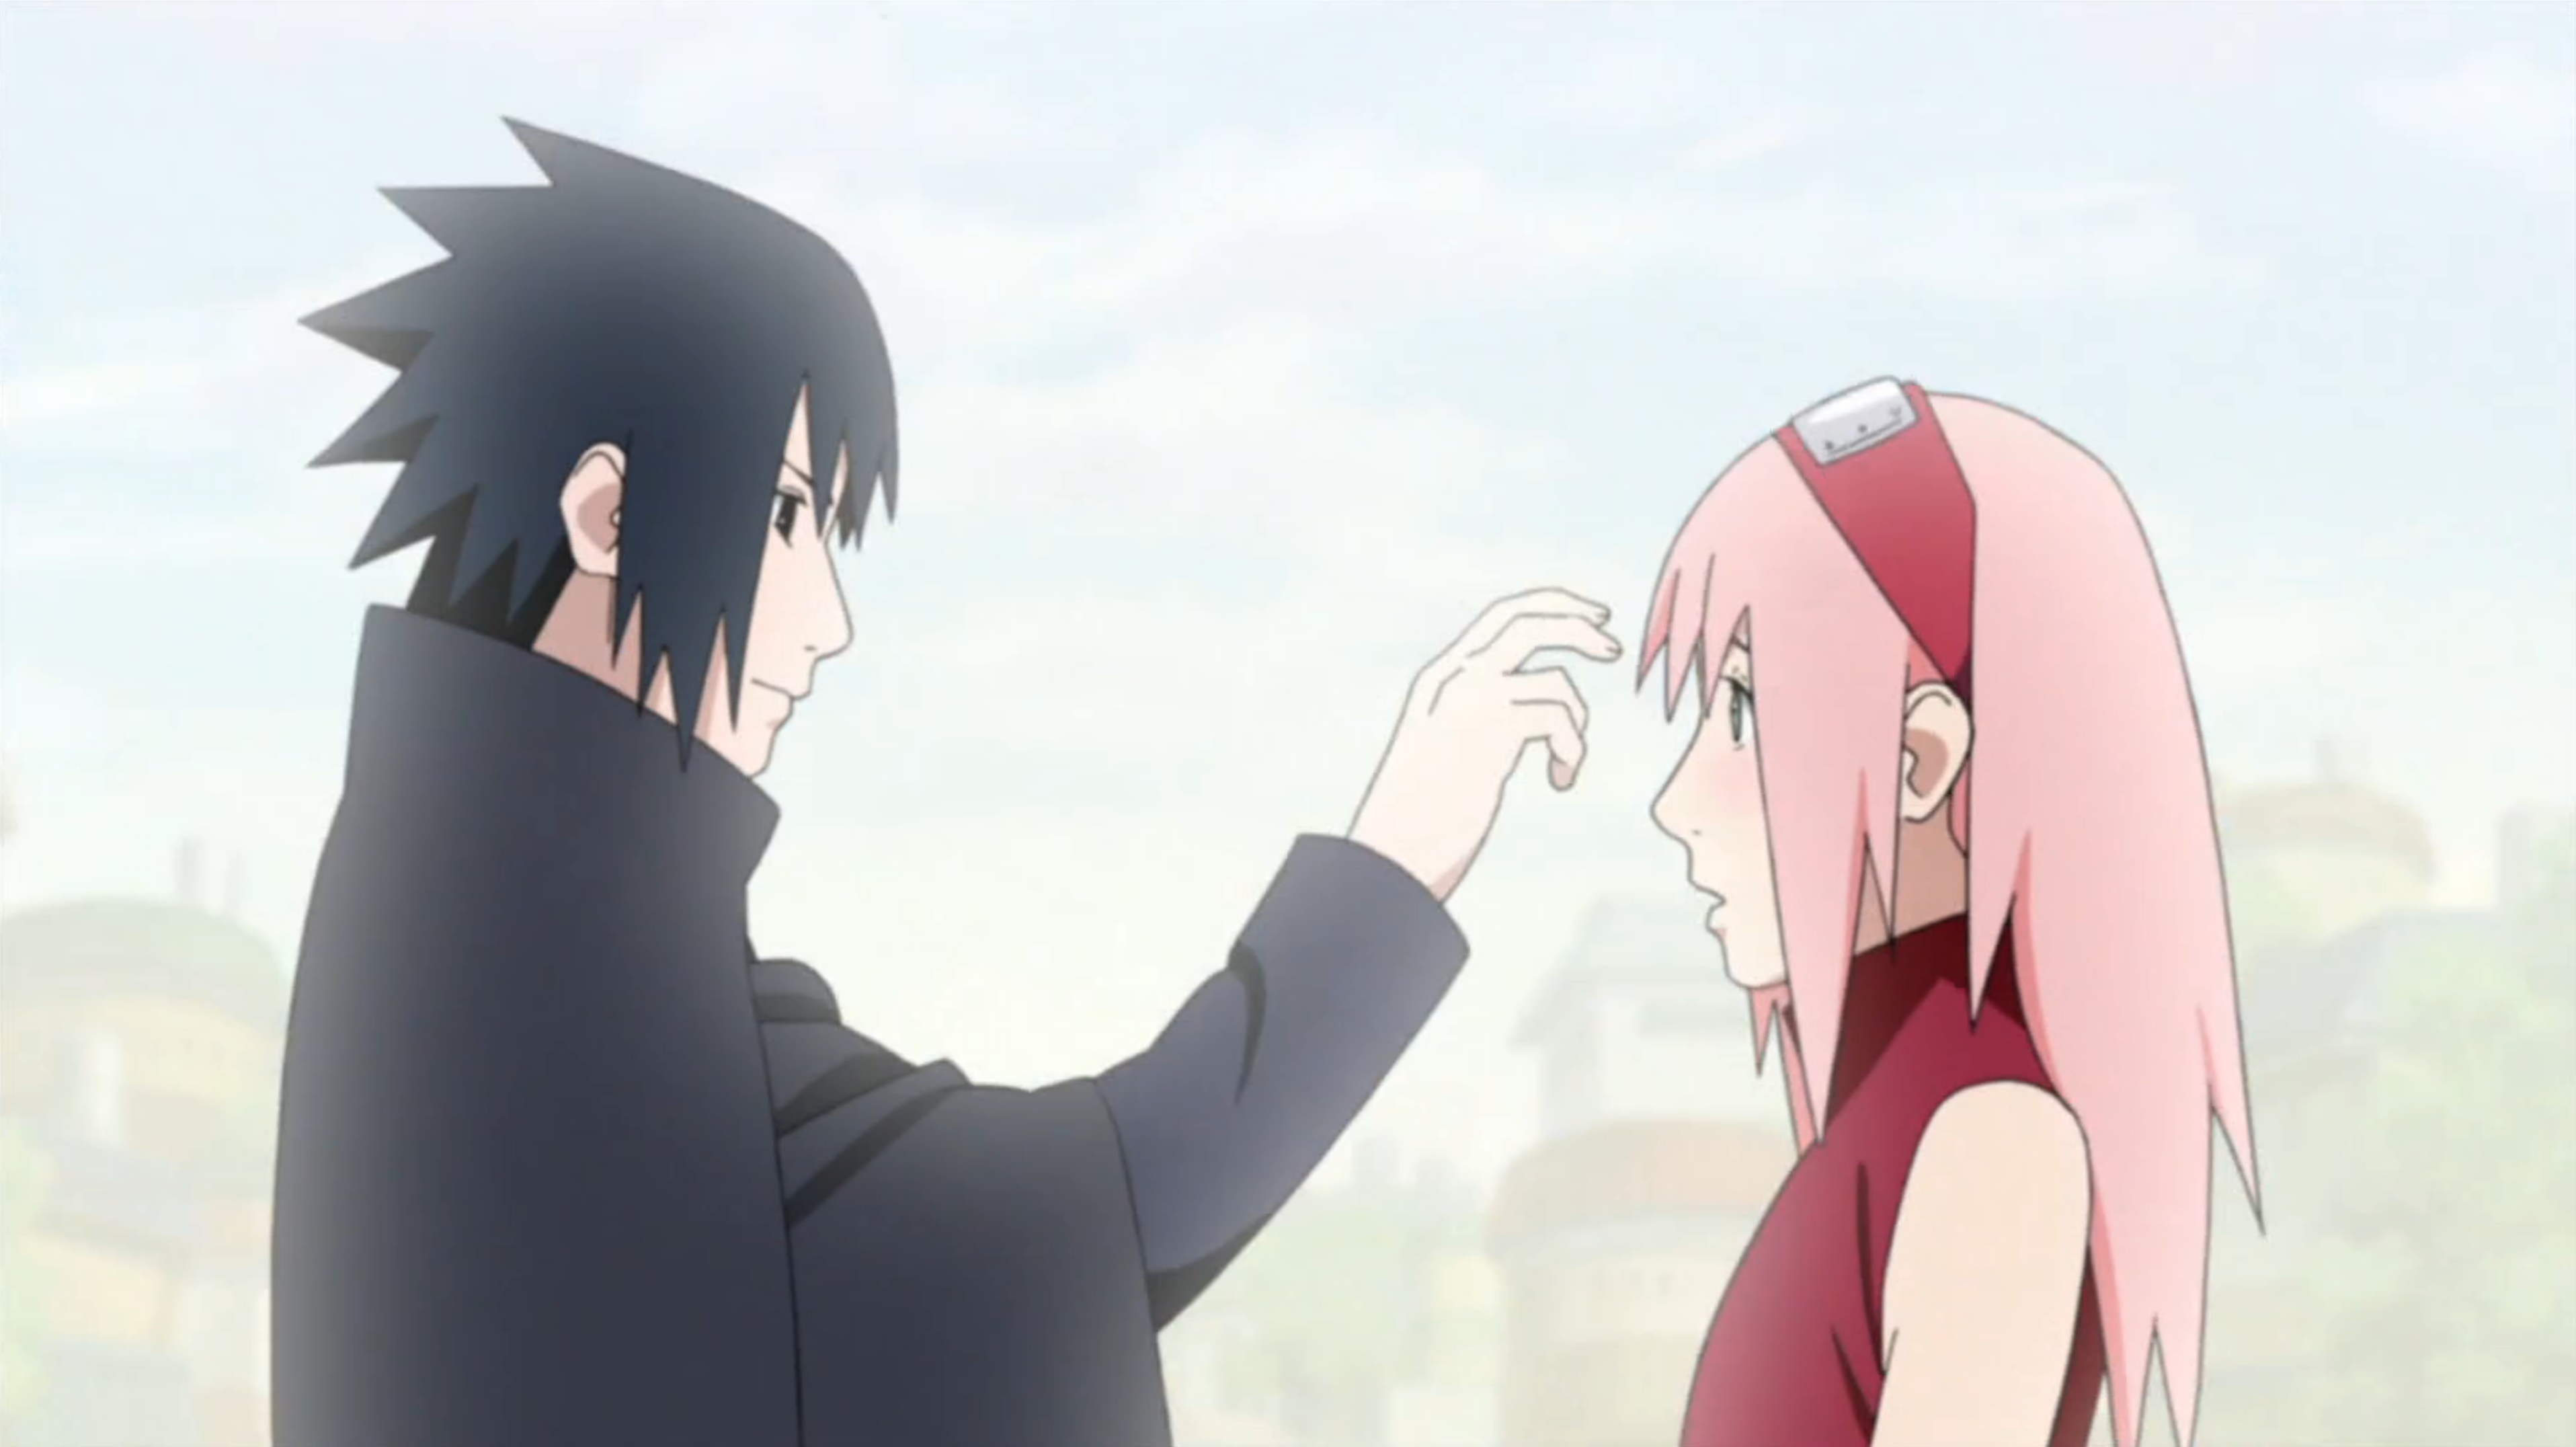 Signs of Sasuke having feelings for Sakura in Shippuden. : r/Naruto